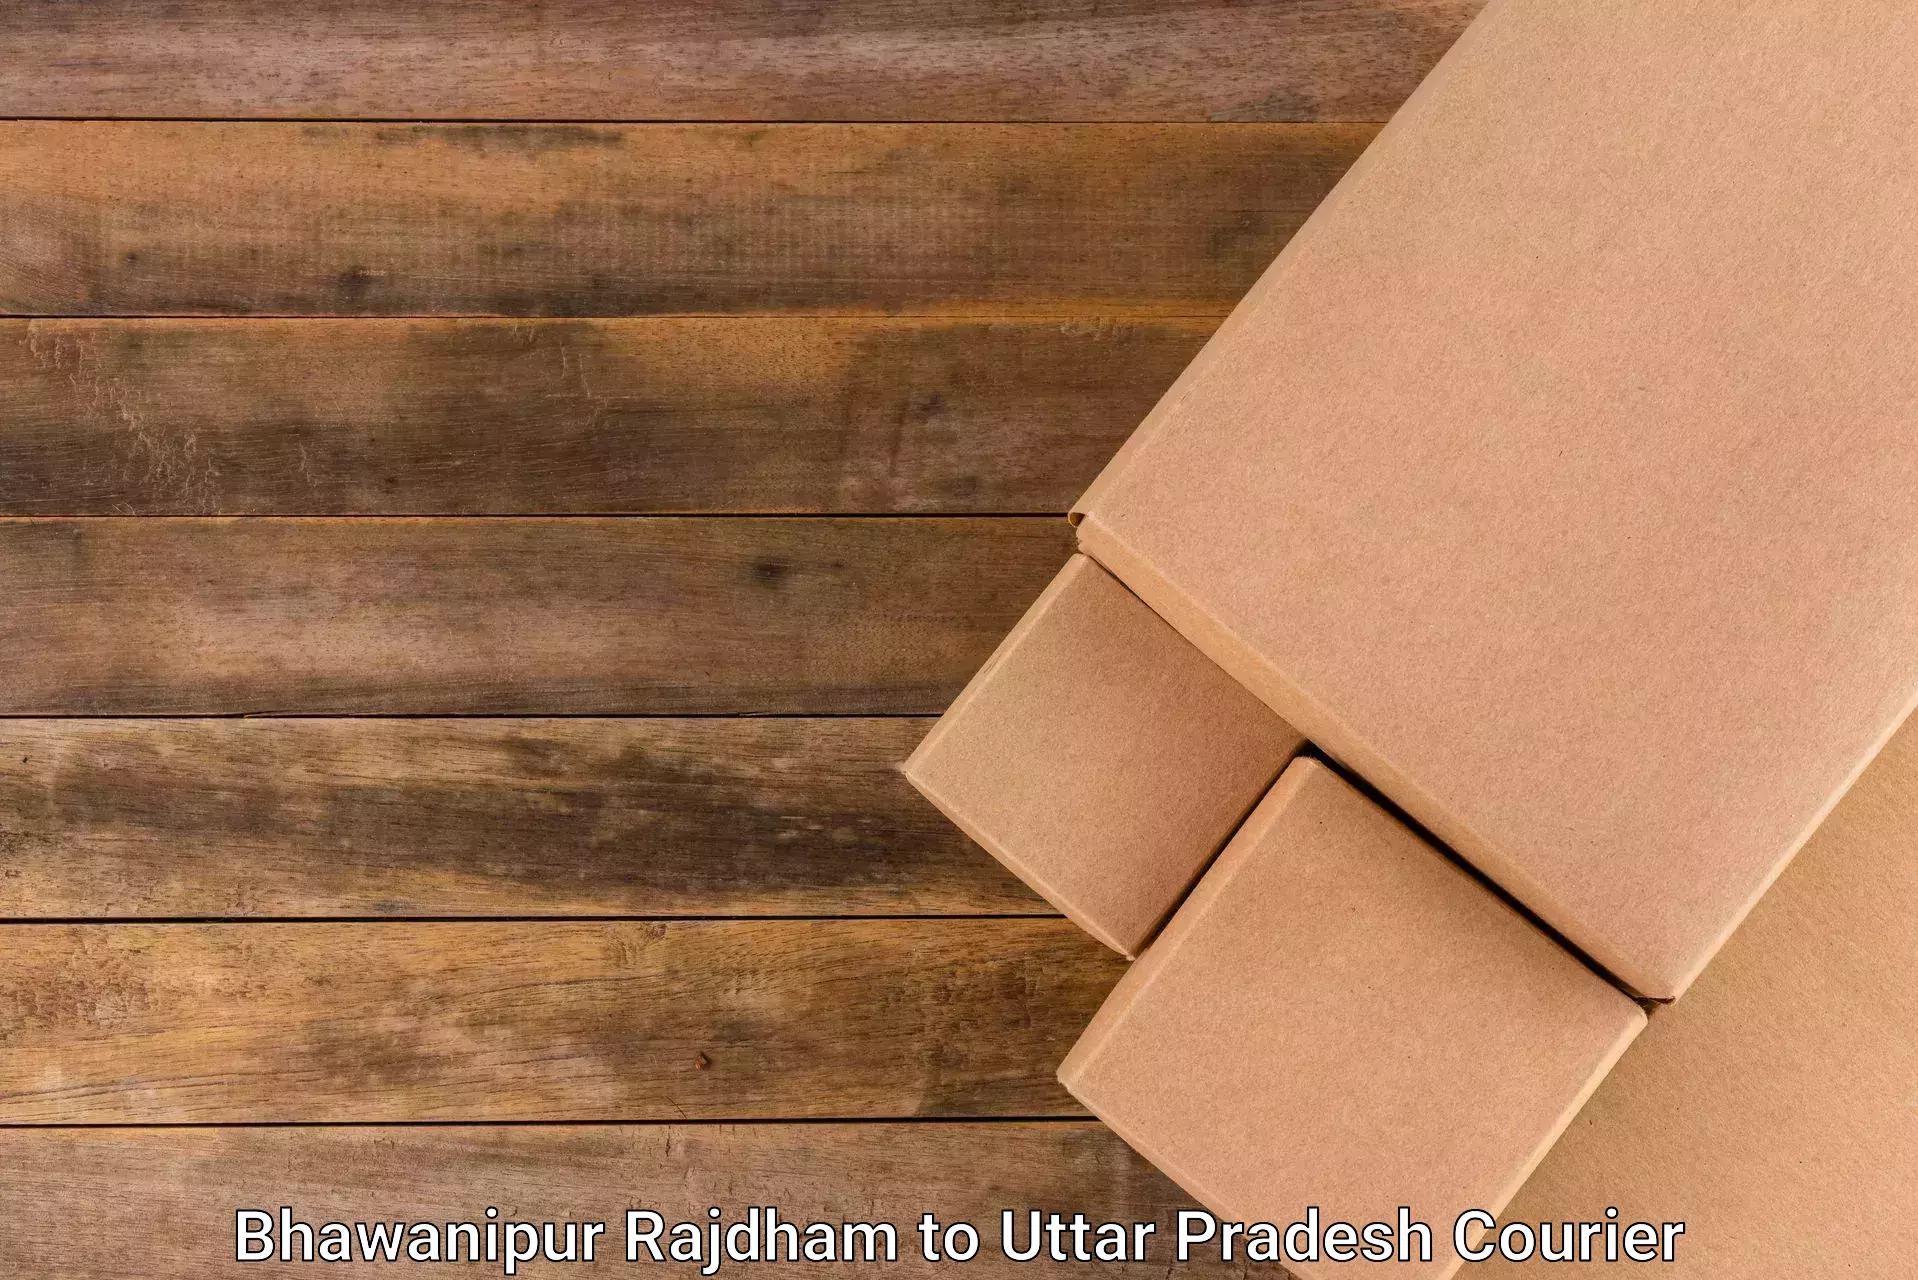 Cash on delivery service Bhawanipur Rajdham to Anupshahar